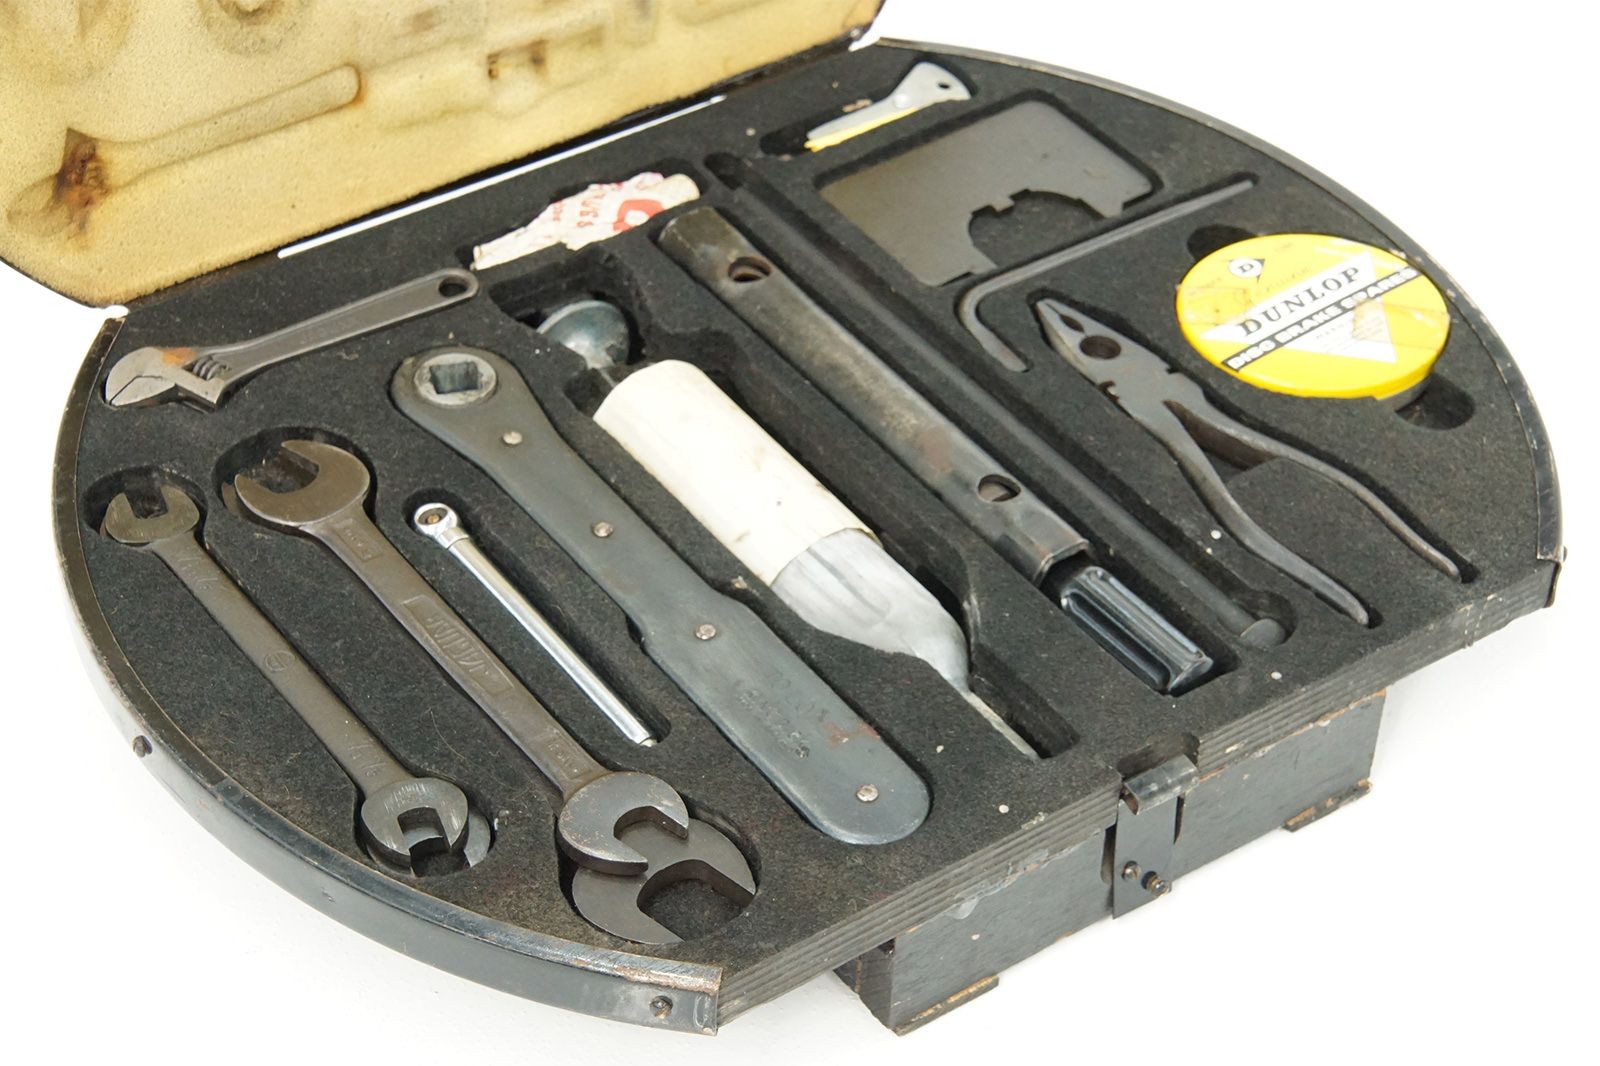 tool-kit-jaguar-mk2-in-wheel-complete-tool-kit-from-the-ian-cummins-collection.jpg